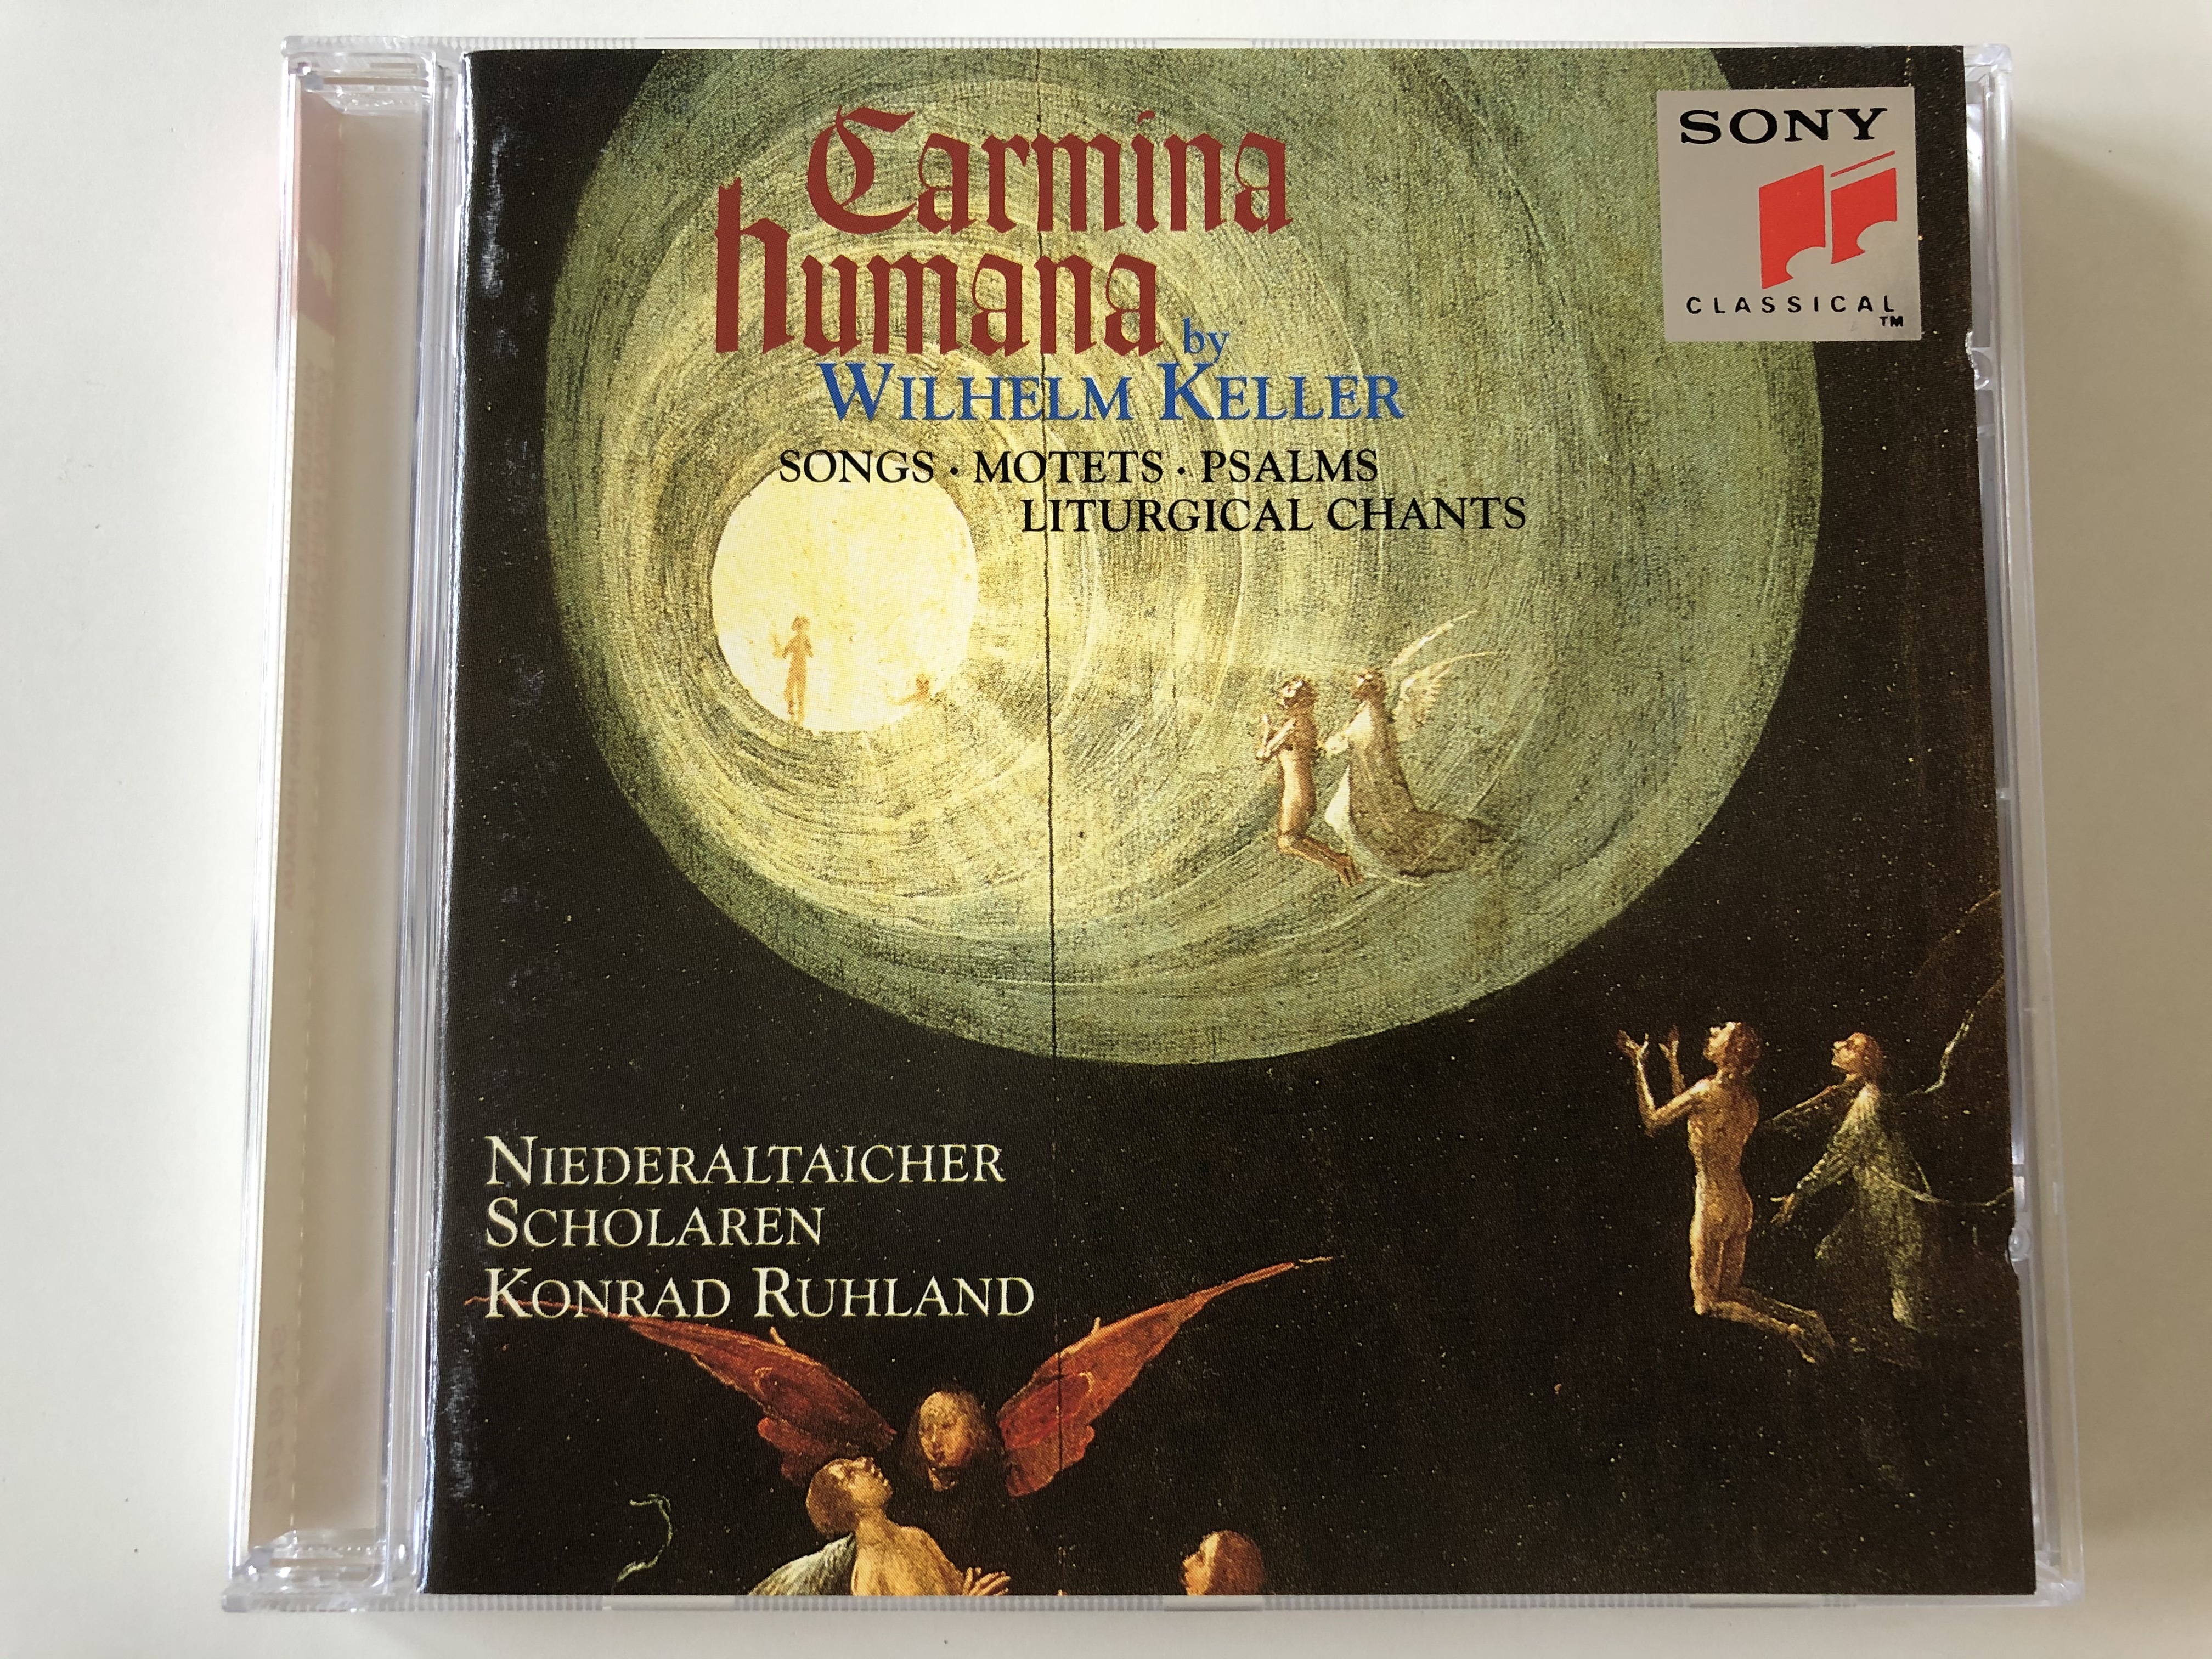 carmina-humana-by-wilhelm-keller-songs-motets-psalms-liturgical-chants-niederaltaicher-scholaren-konrad-ruhland-sony-classical-audio-cd-1995-sk-68245-1-.jpg